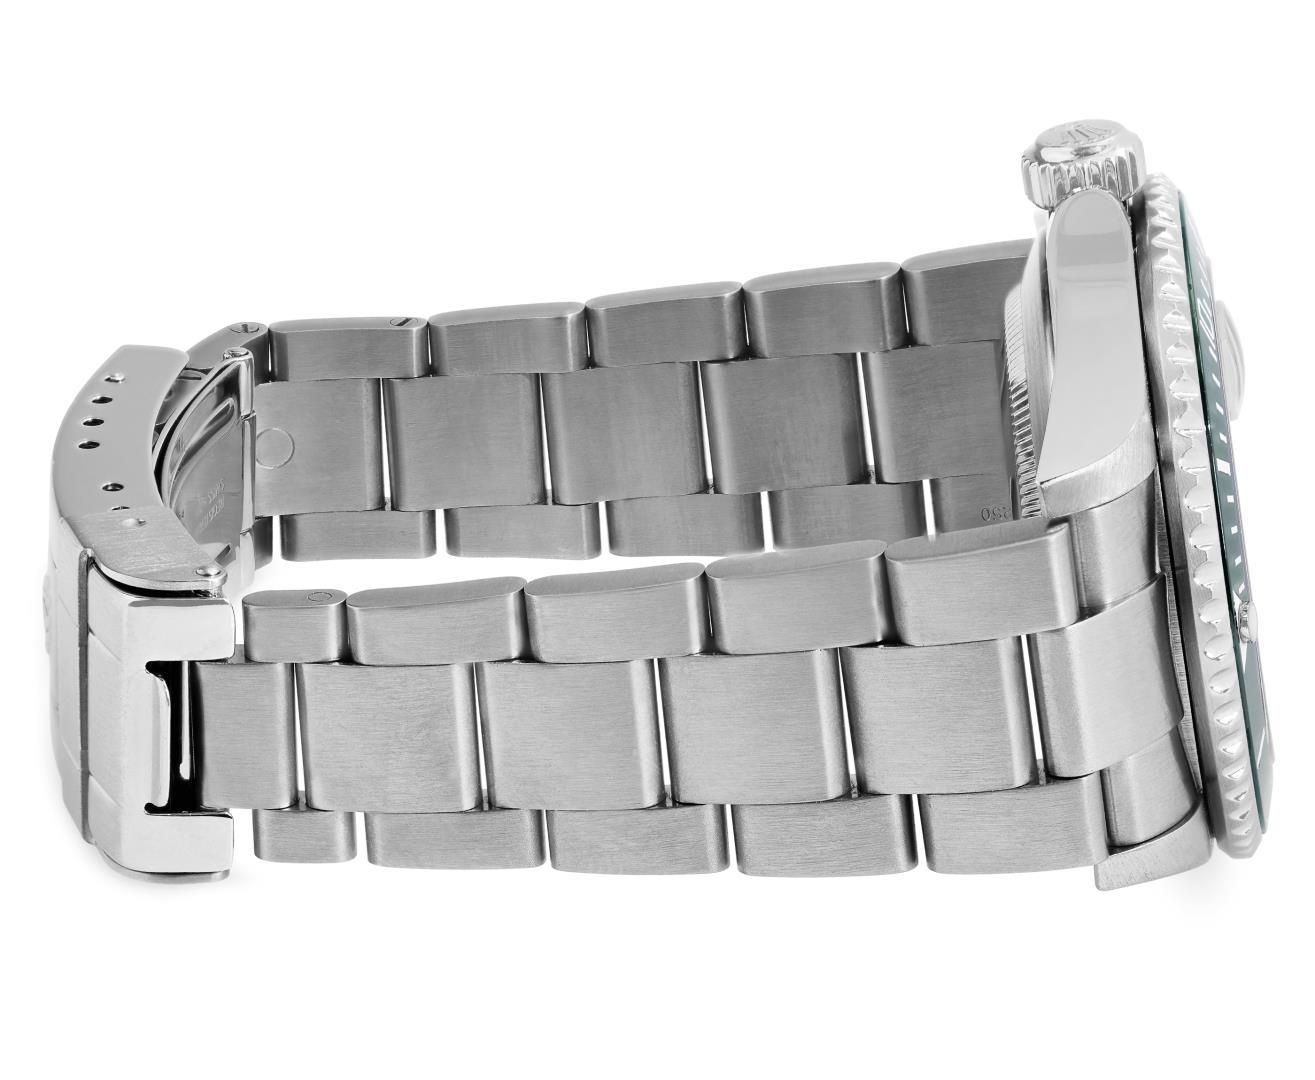 Rolex Mens Stainless Steel Submariner Wristwatch With Rolex Box